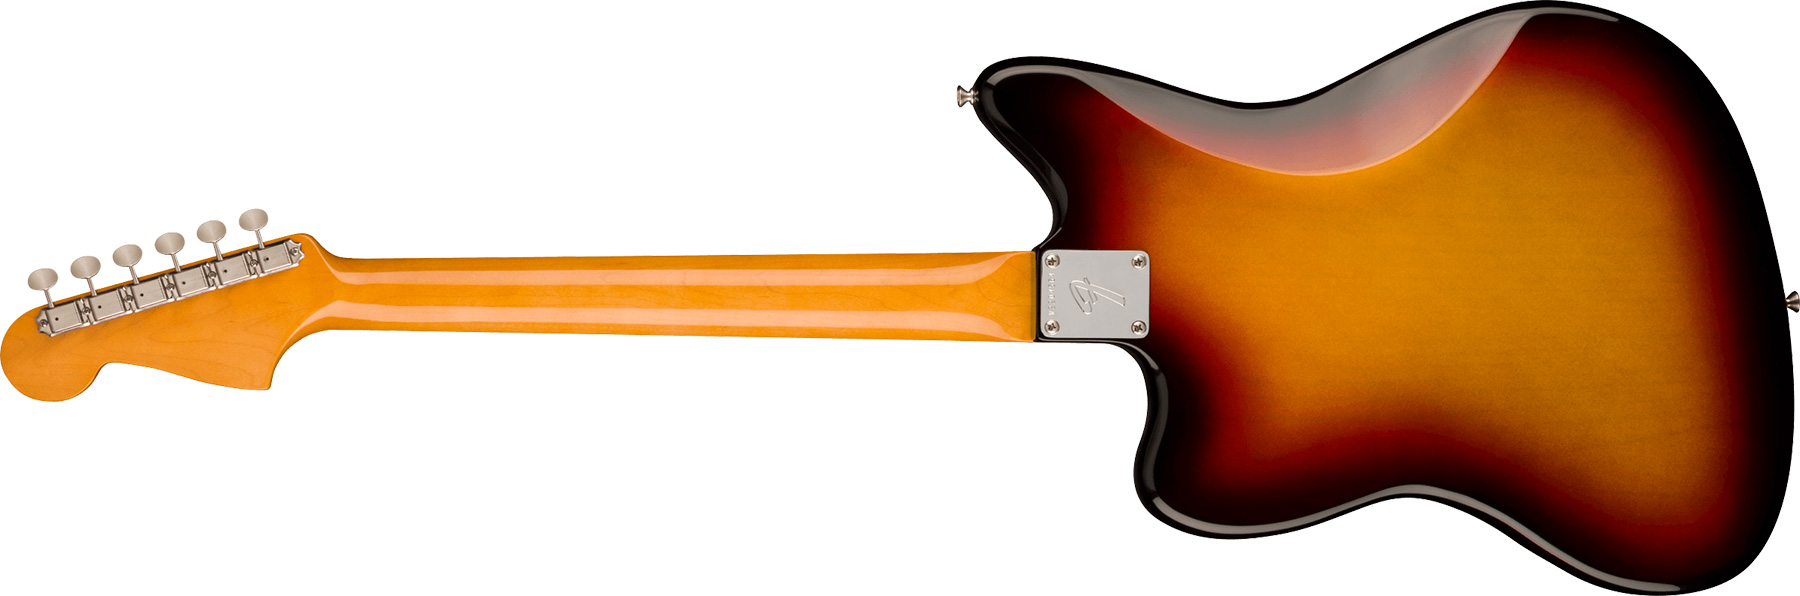 Fender Jazzmaster 1966 American Vintage Ii Usa Sh Trem Rw - 3-color Sunburst - Retro rock electric guitar - Variation 1